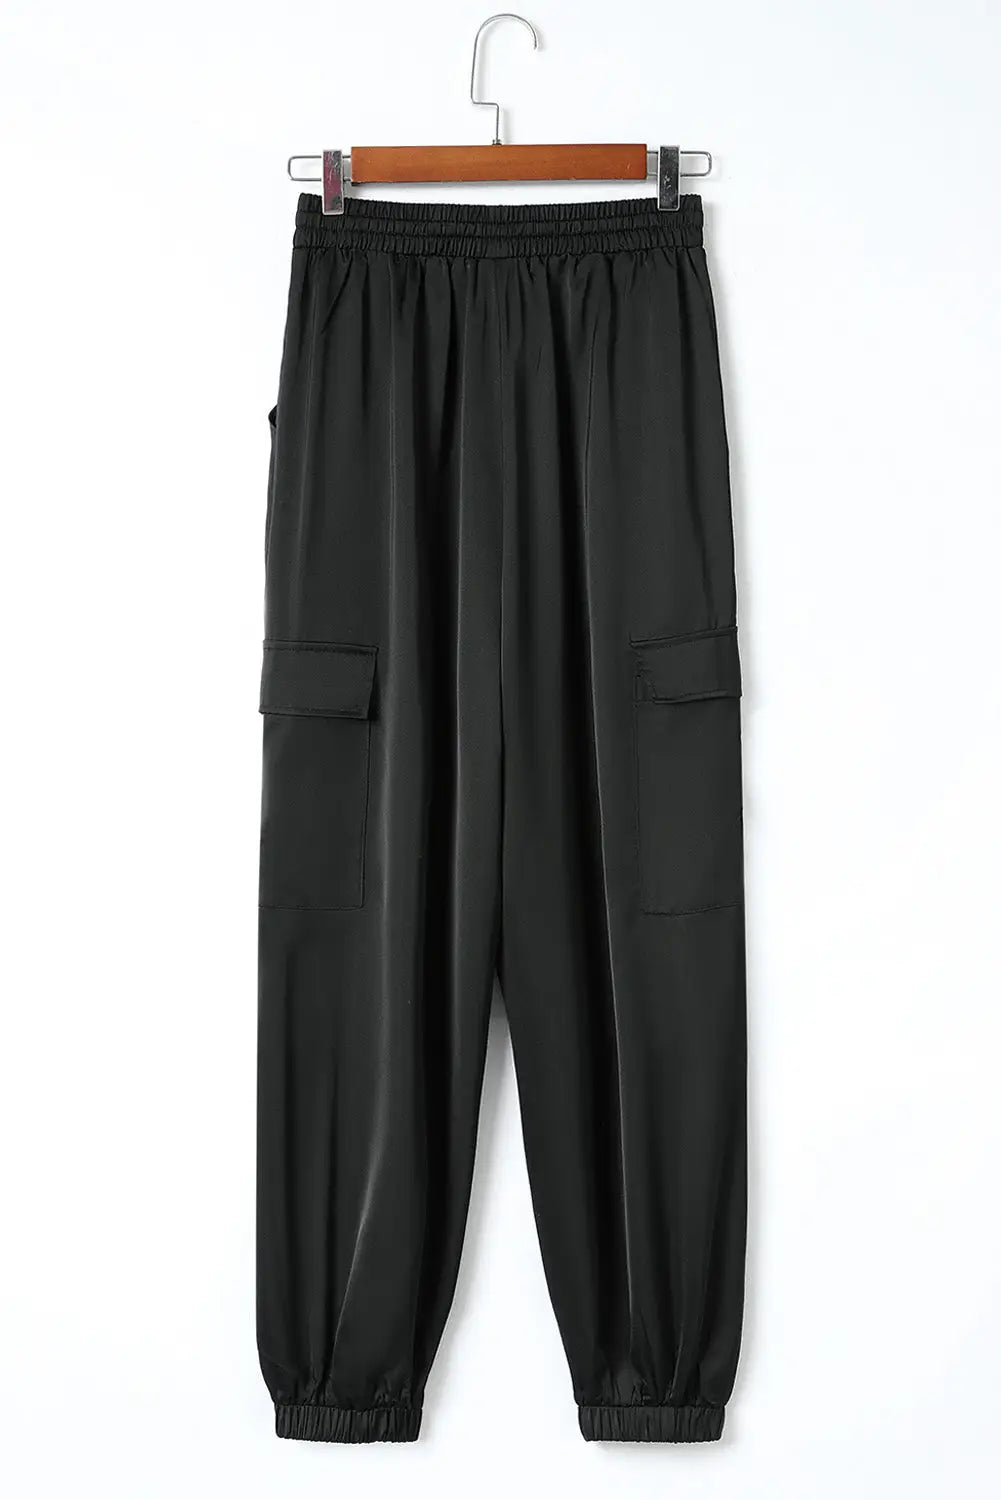 Black satin pocketed drawstring elastic waist pants - cargo